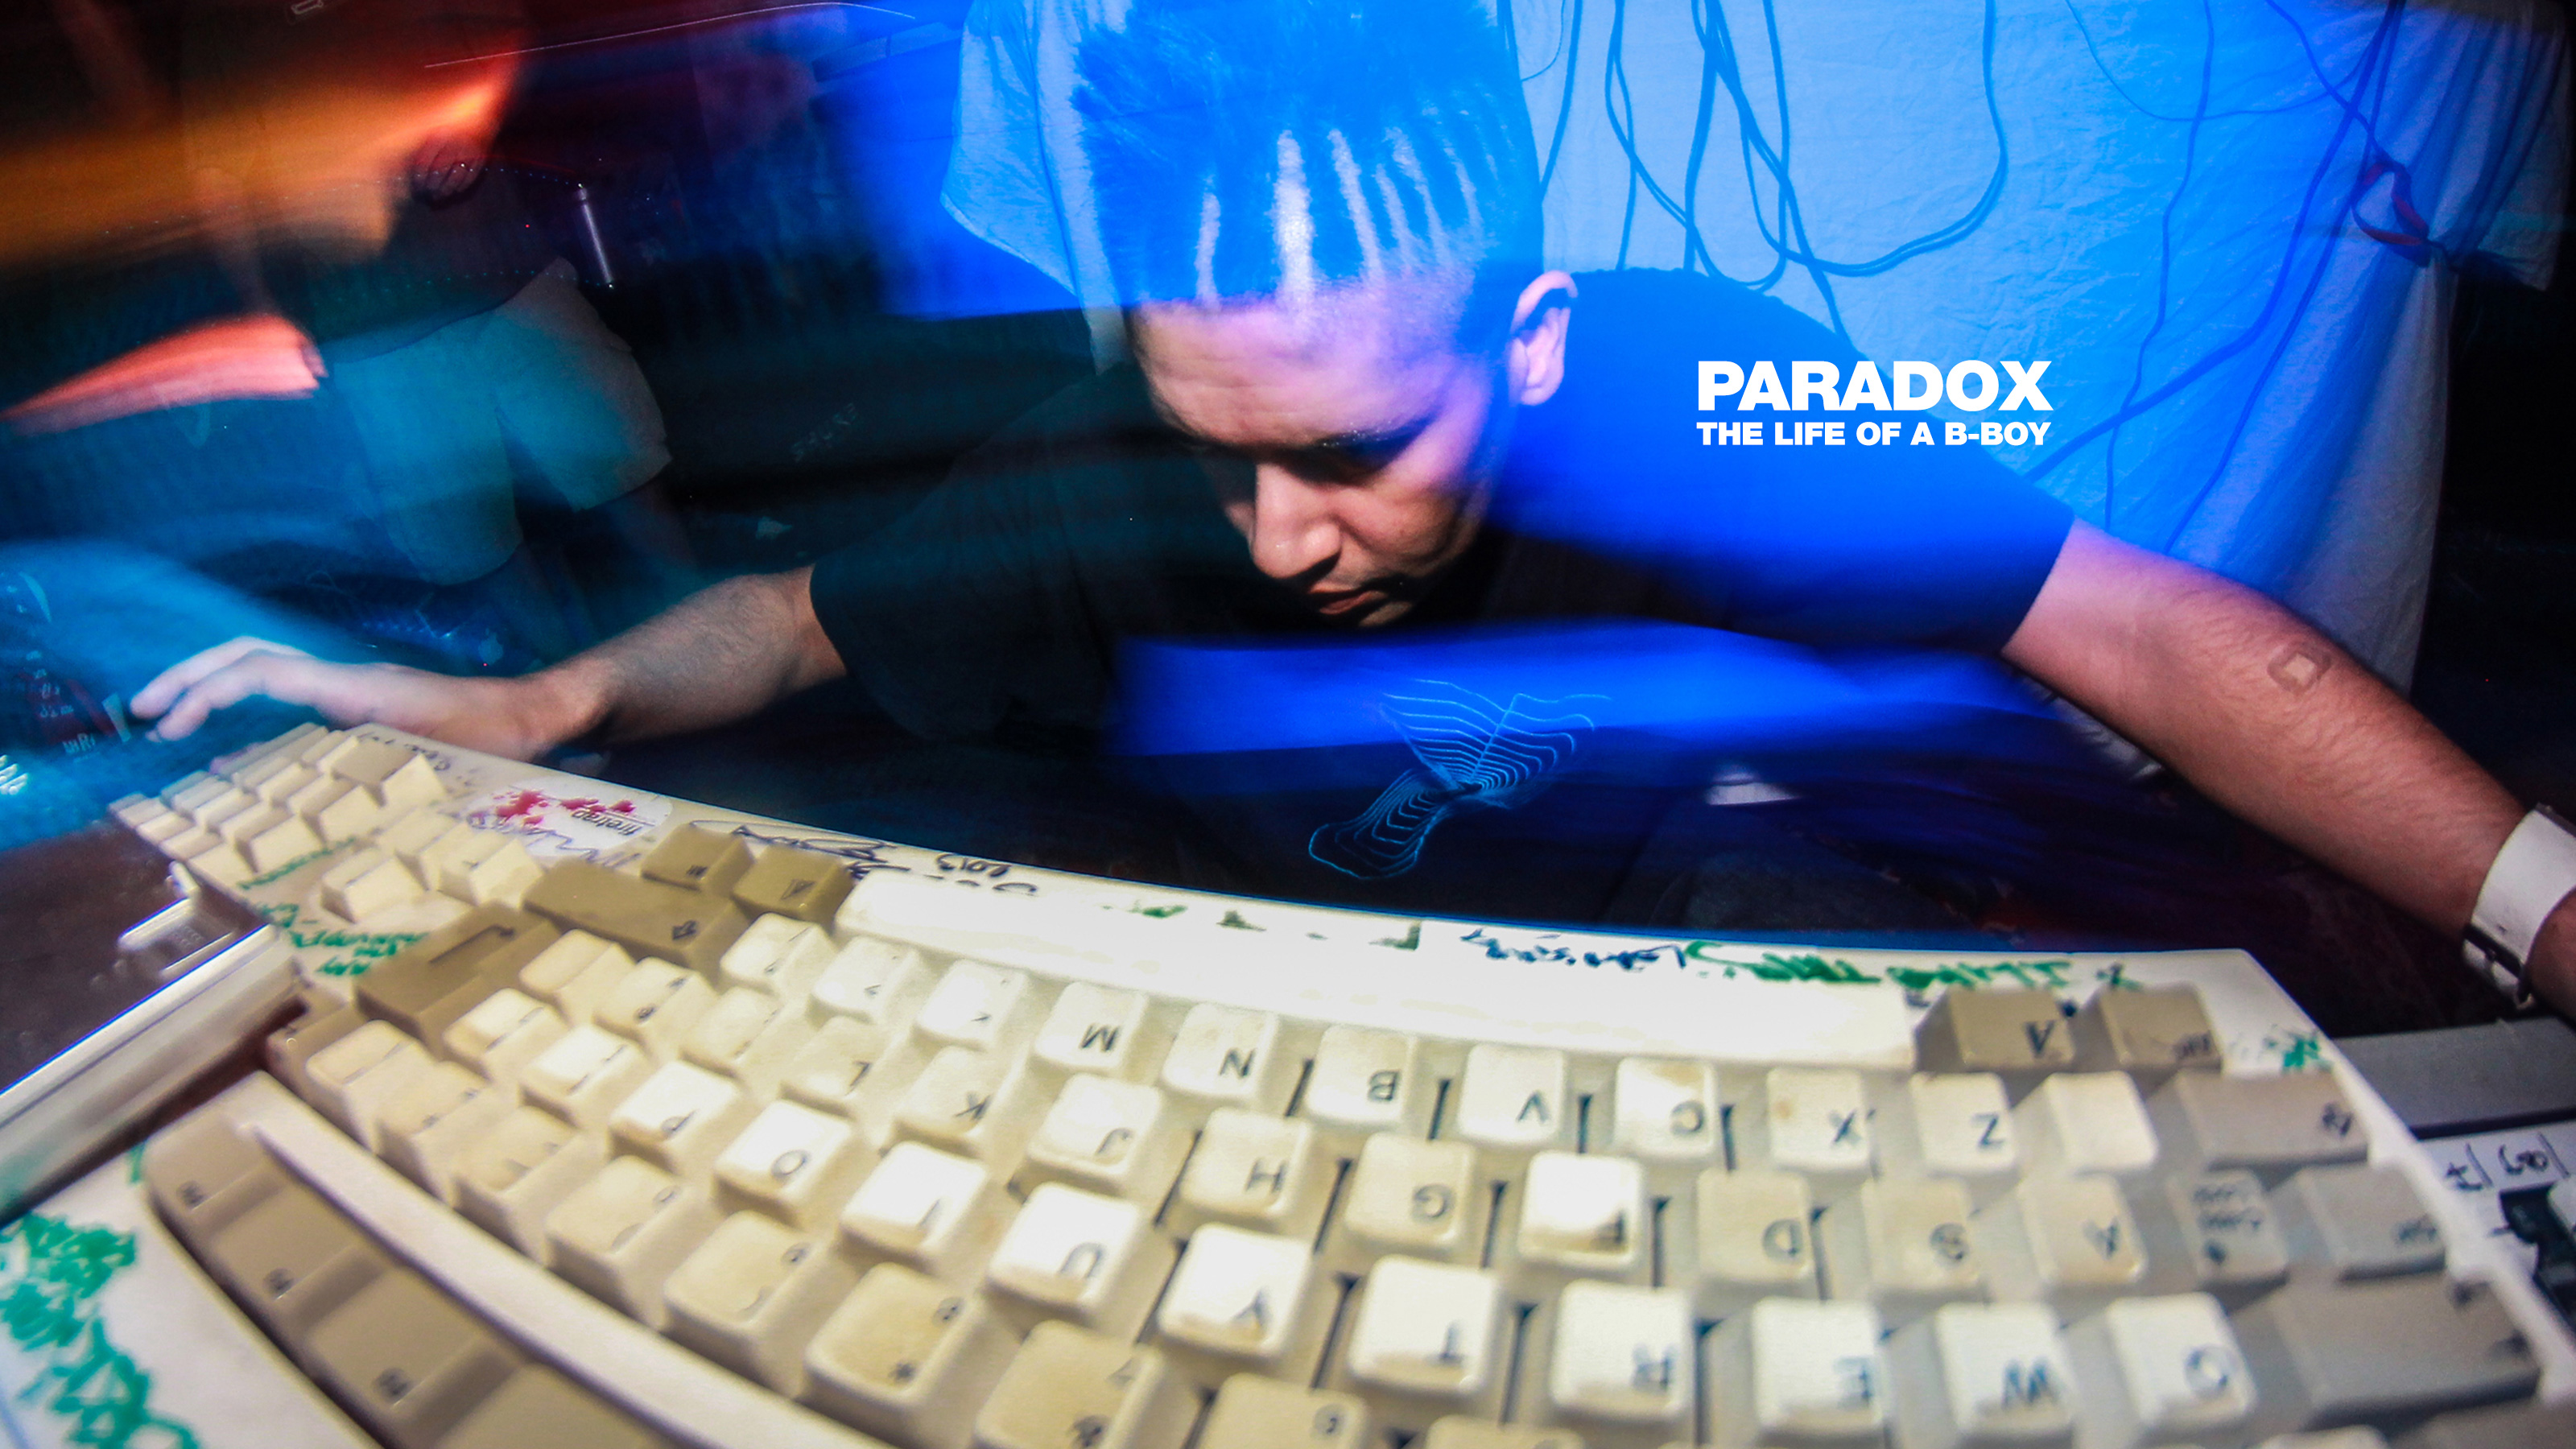 Paradox: The life of a b-boy